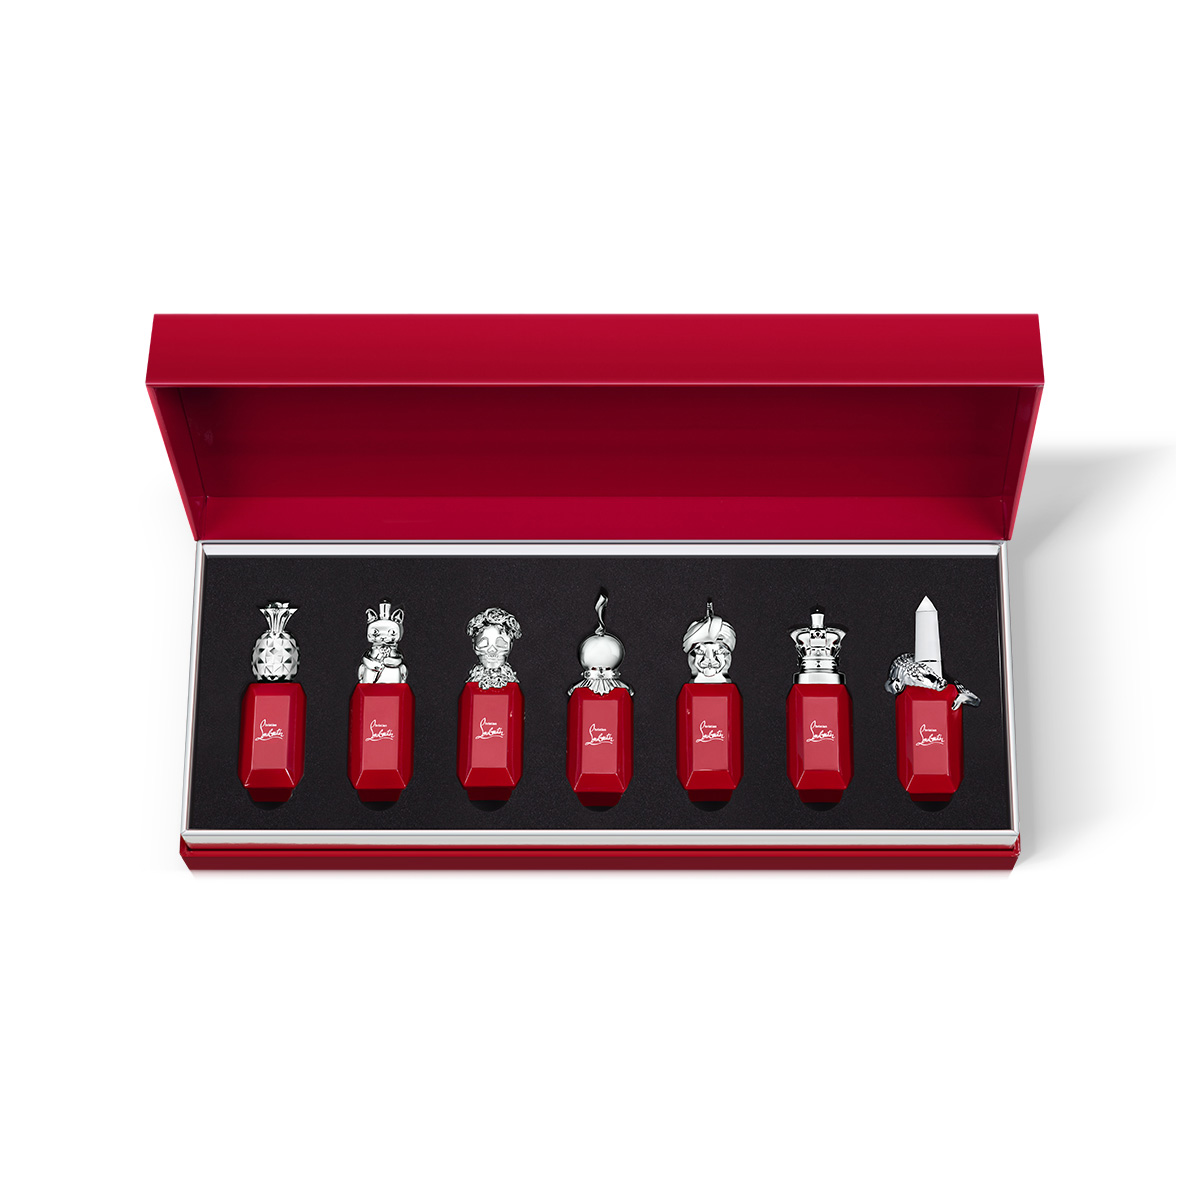 Christian Louboutin Loubiworld fragrance gift set review 